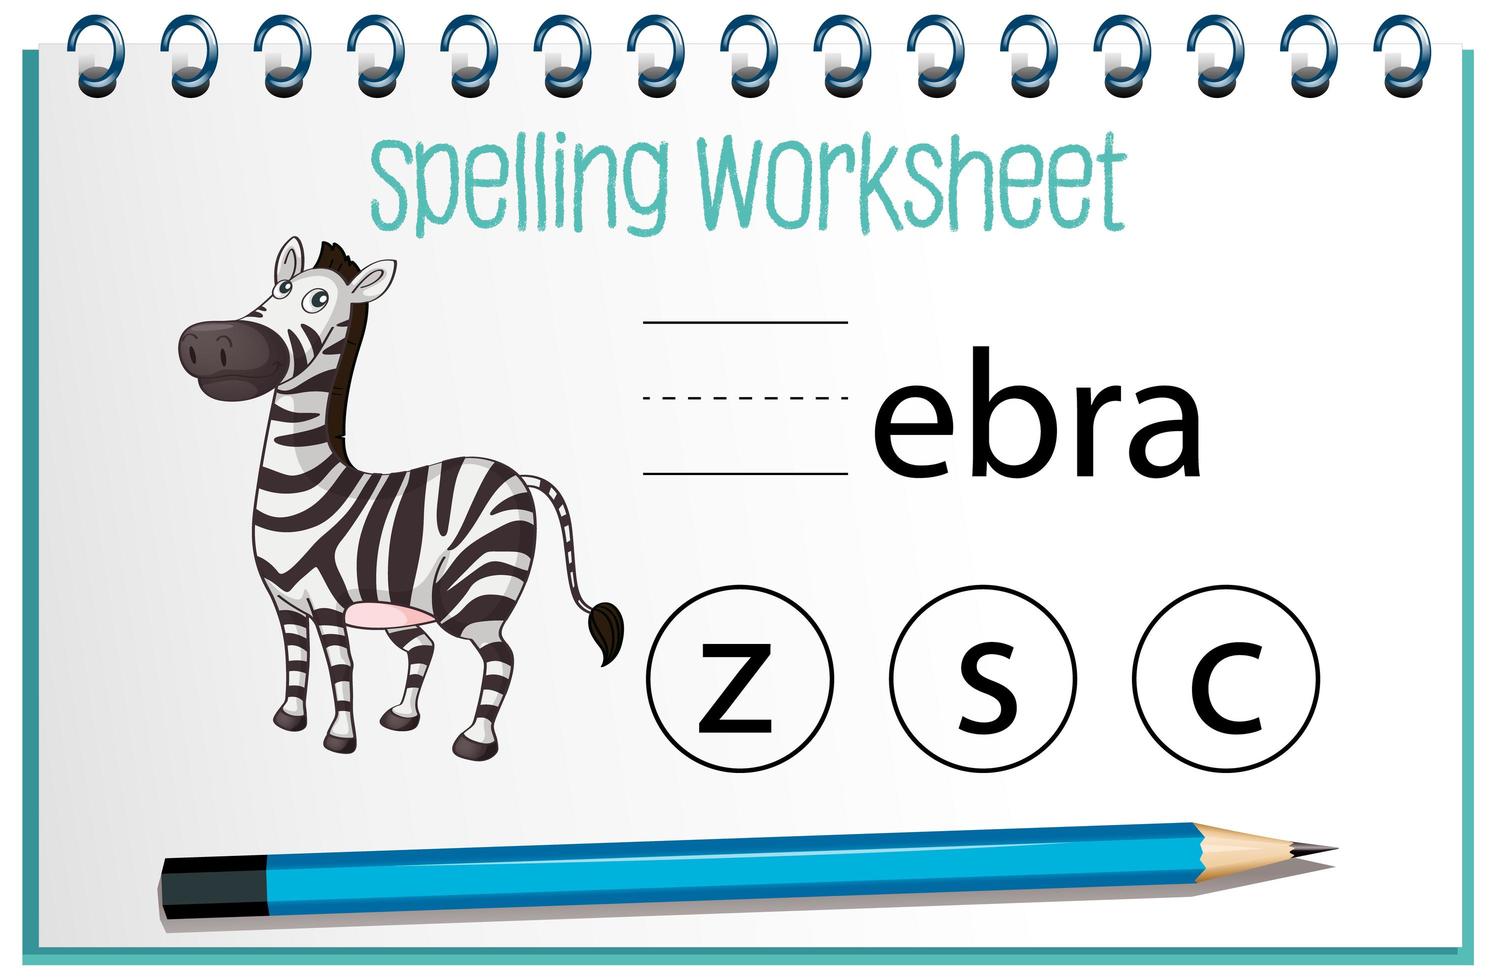 Find missing letter with zebra vector